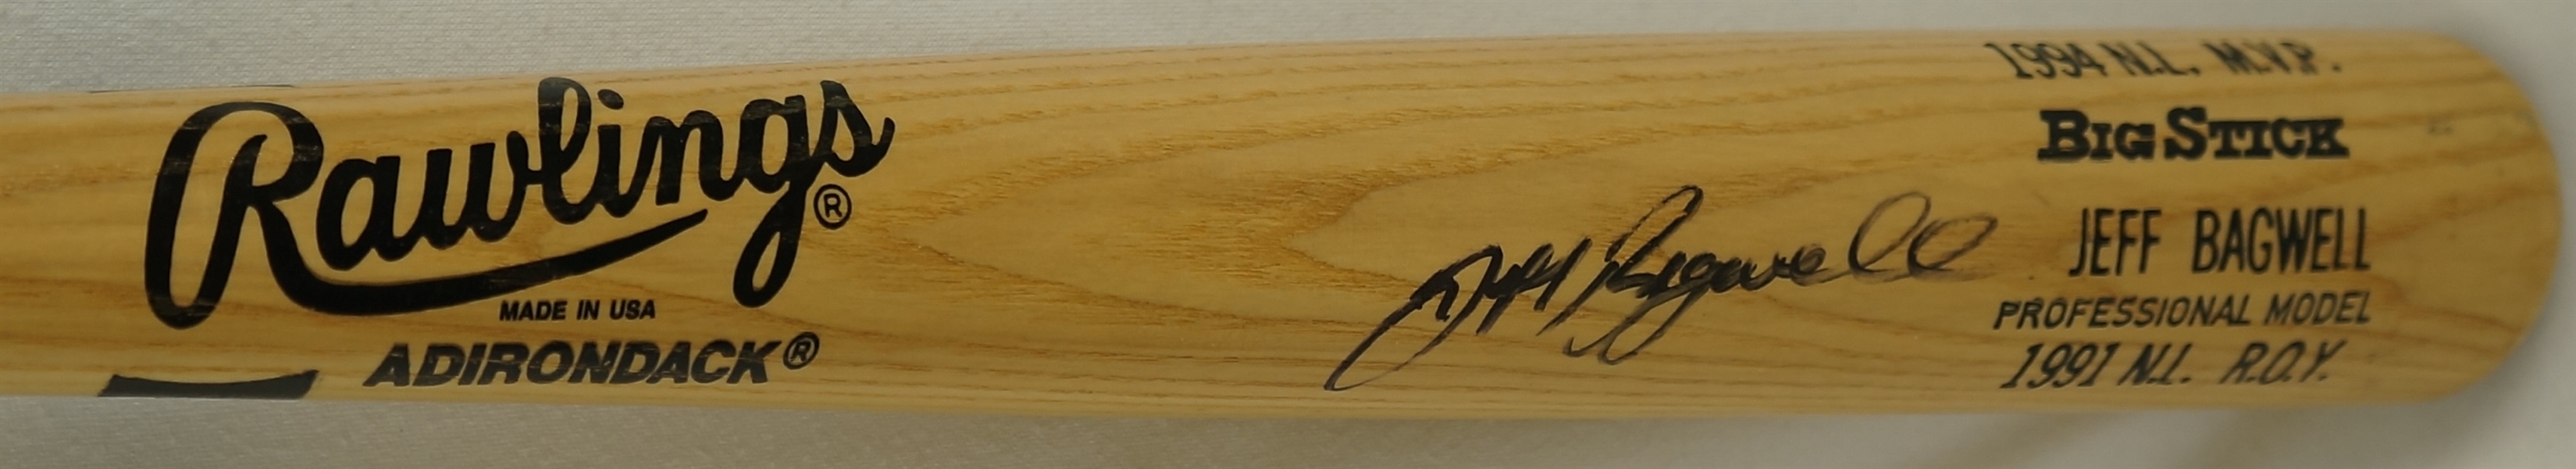 Jeff Bagwell Autographed 1991 NL ROY & 1994 NL MVP Bat